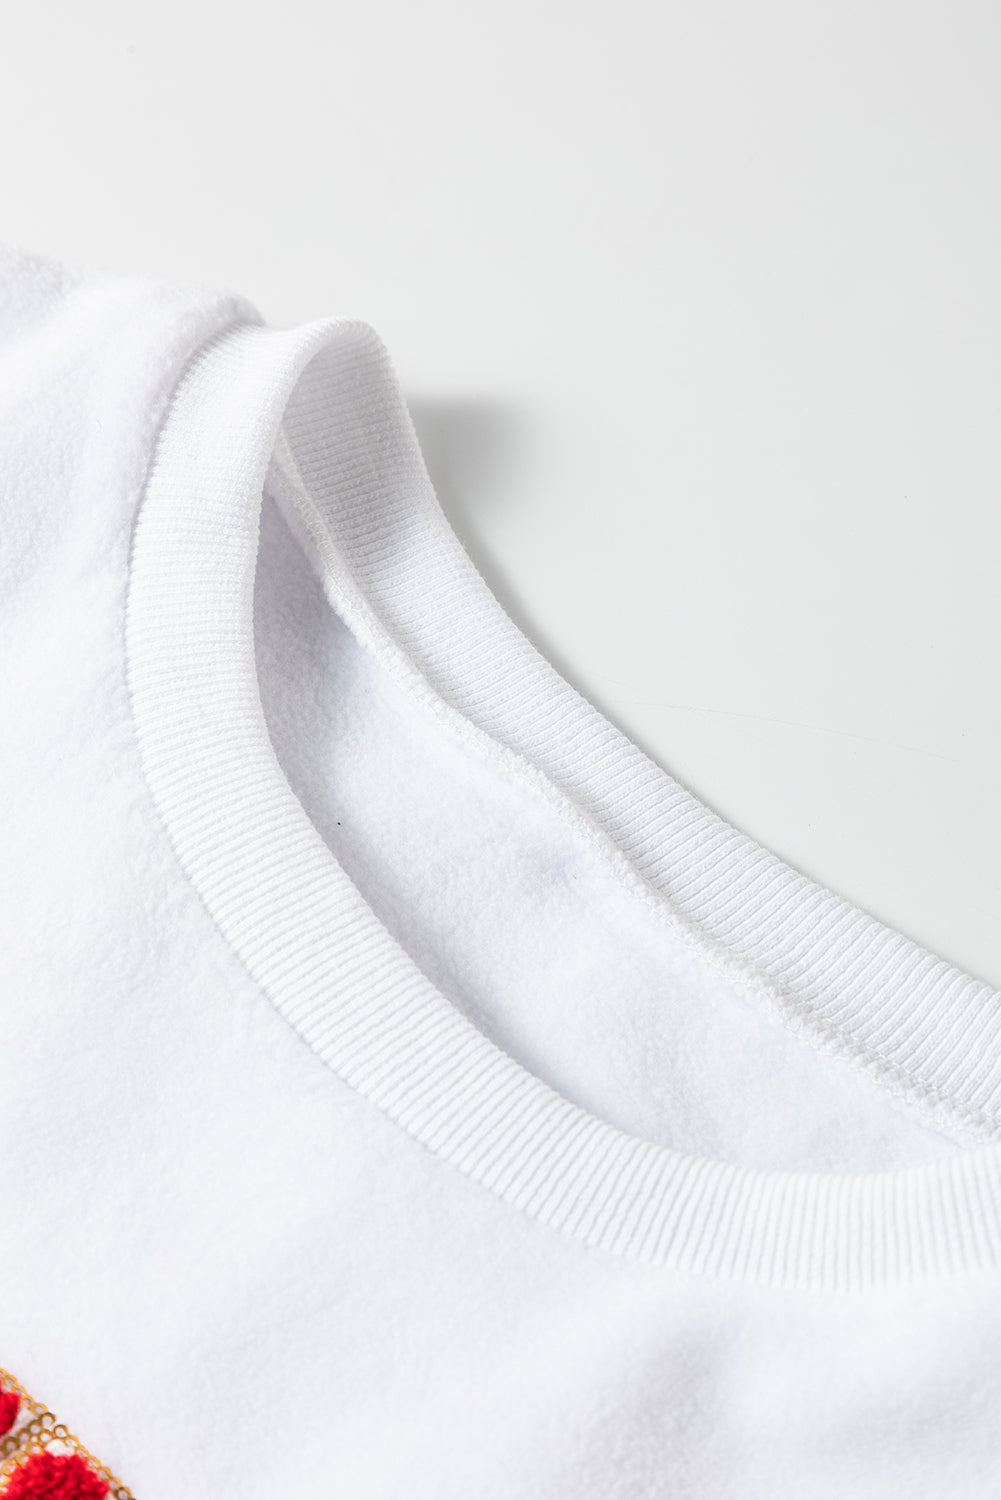 White HOWDY SANTA Chenille Letters Baggy Sweatshirt